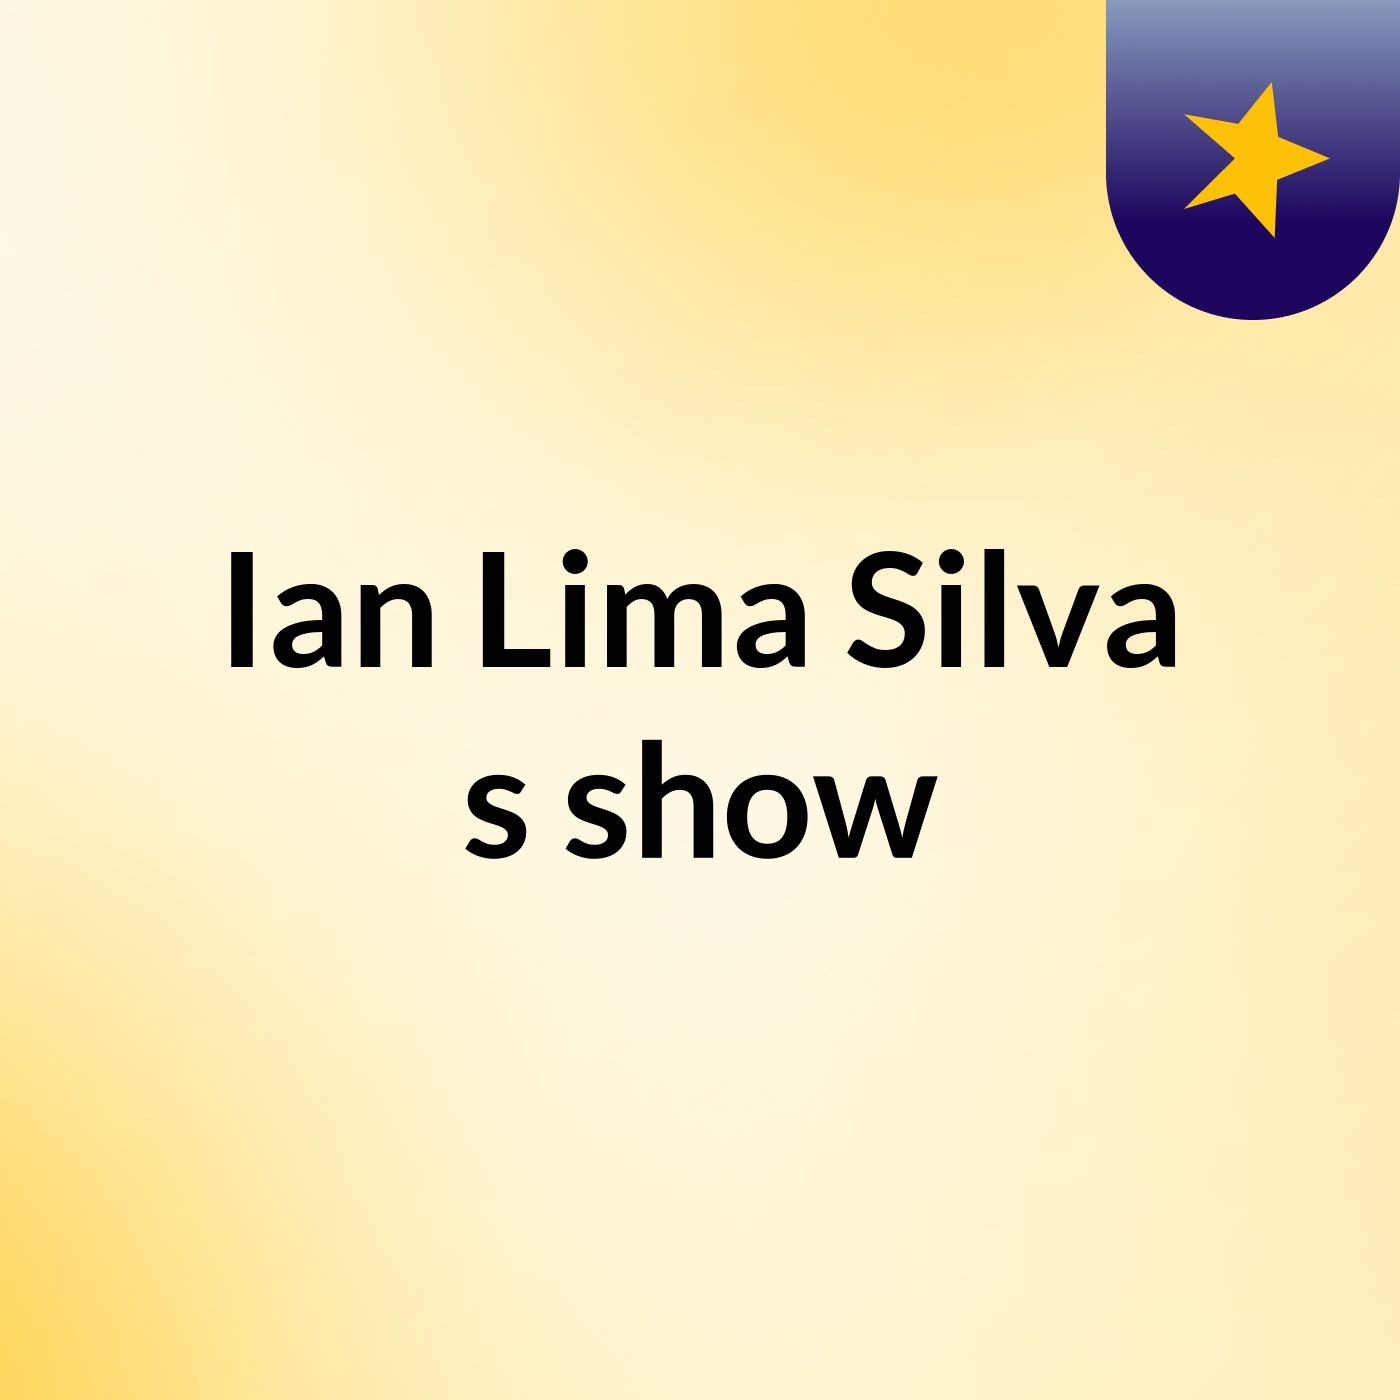 Ian Lima Silva's show